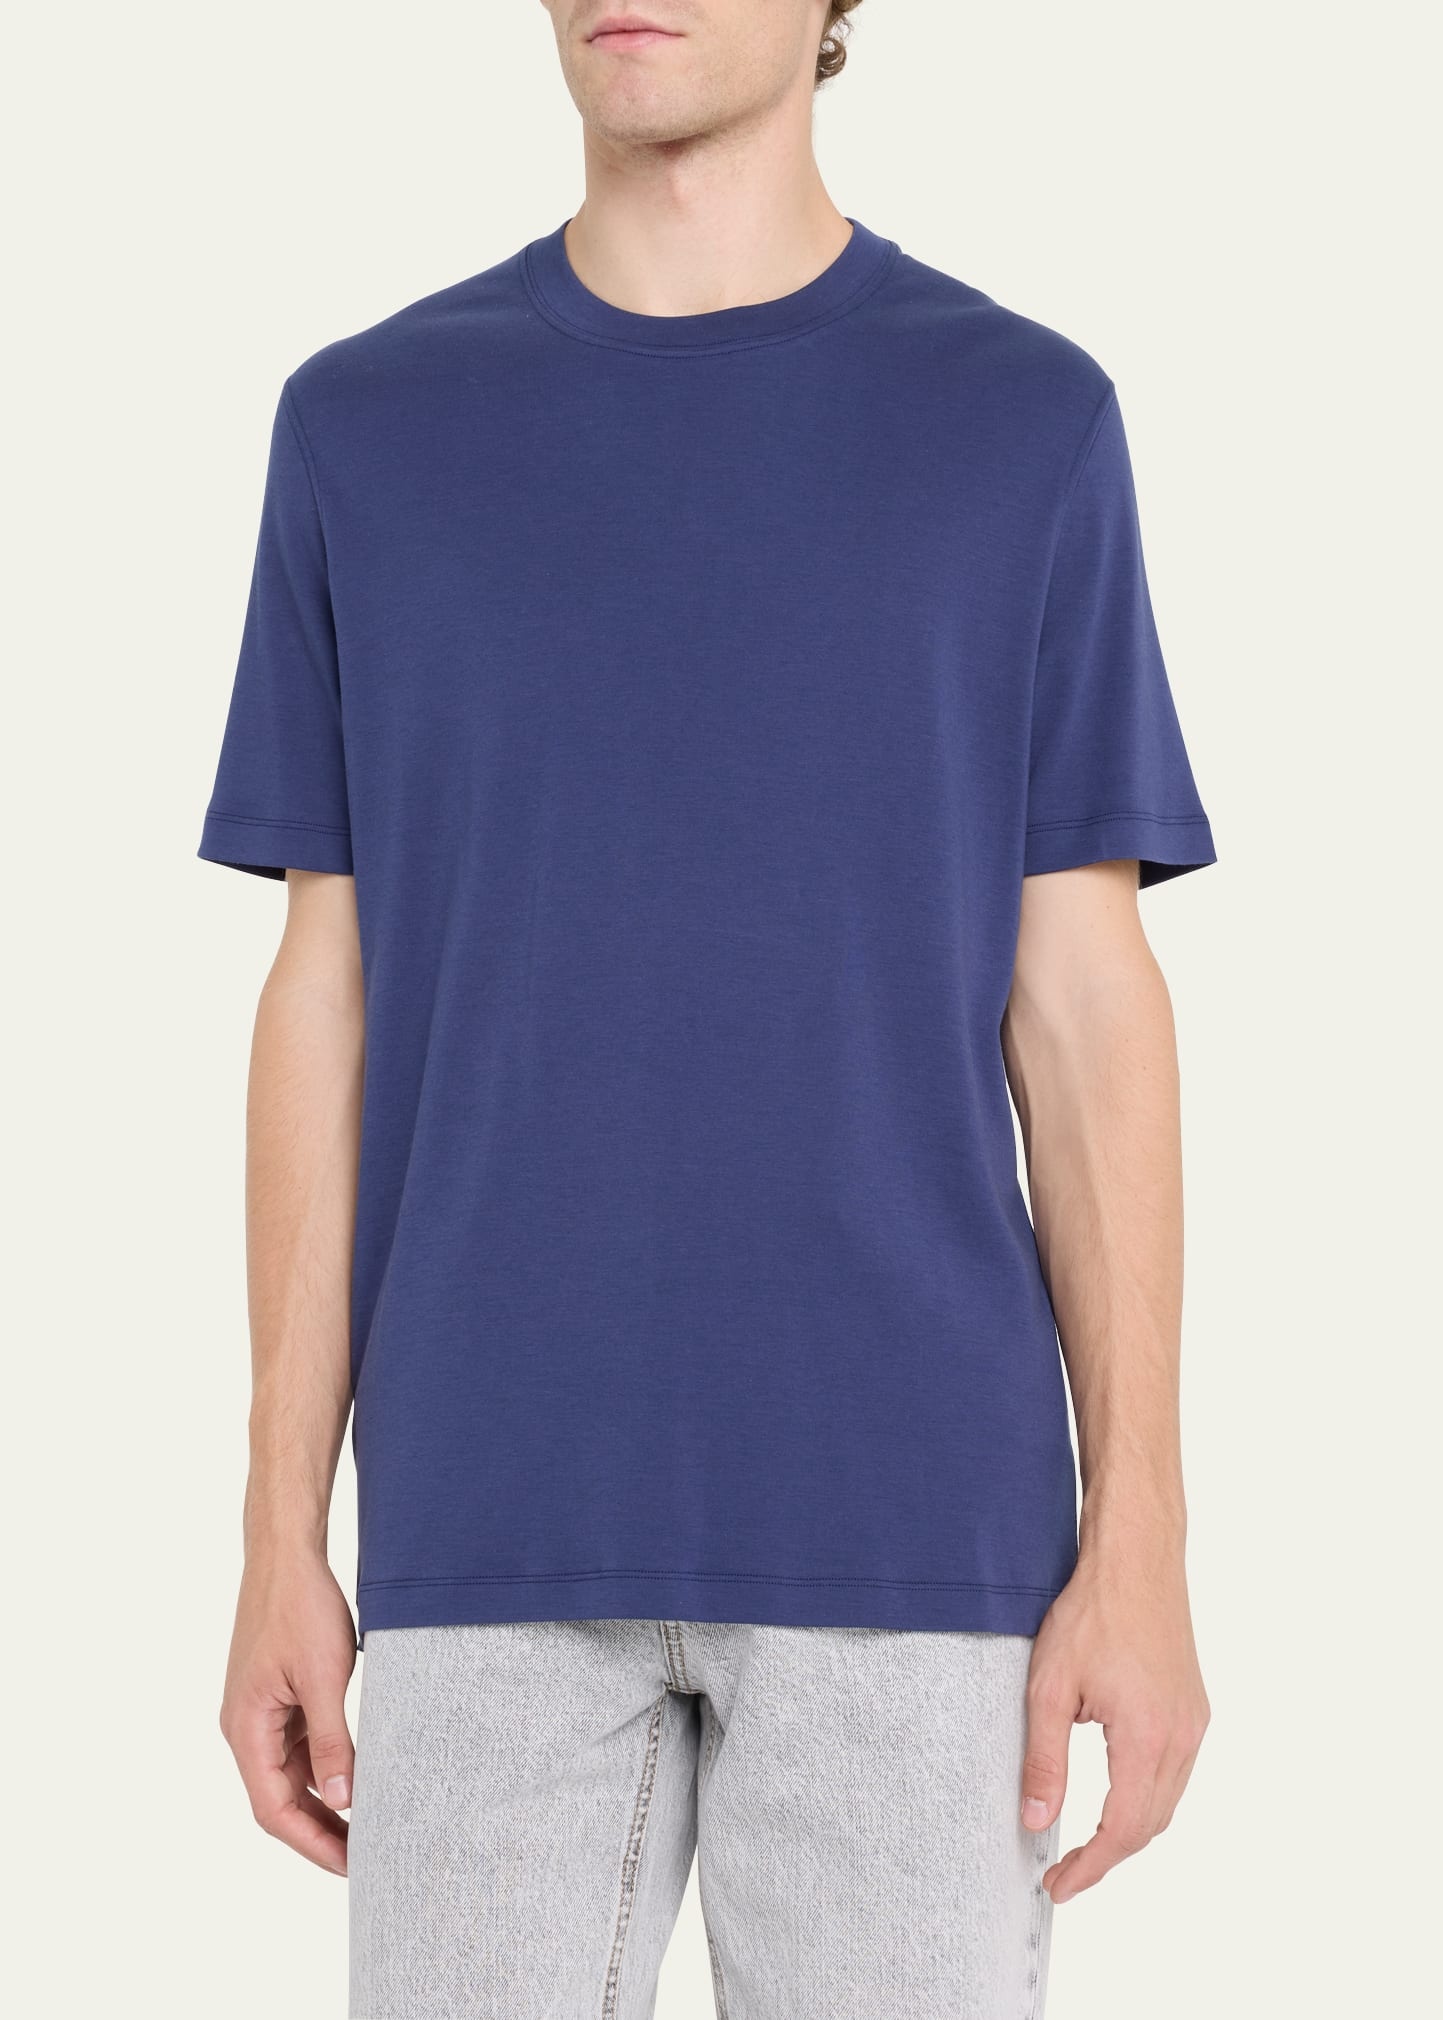 Men's Cotton-Silk Crewneck T-Shirt - 4